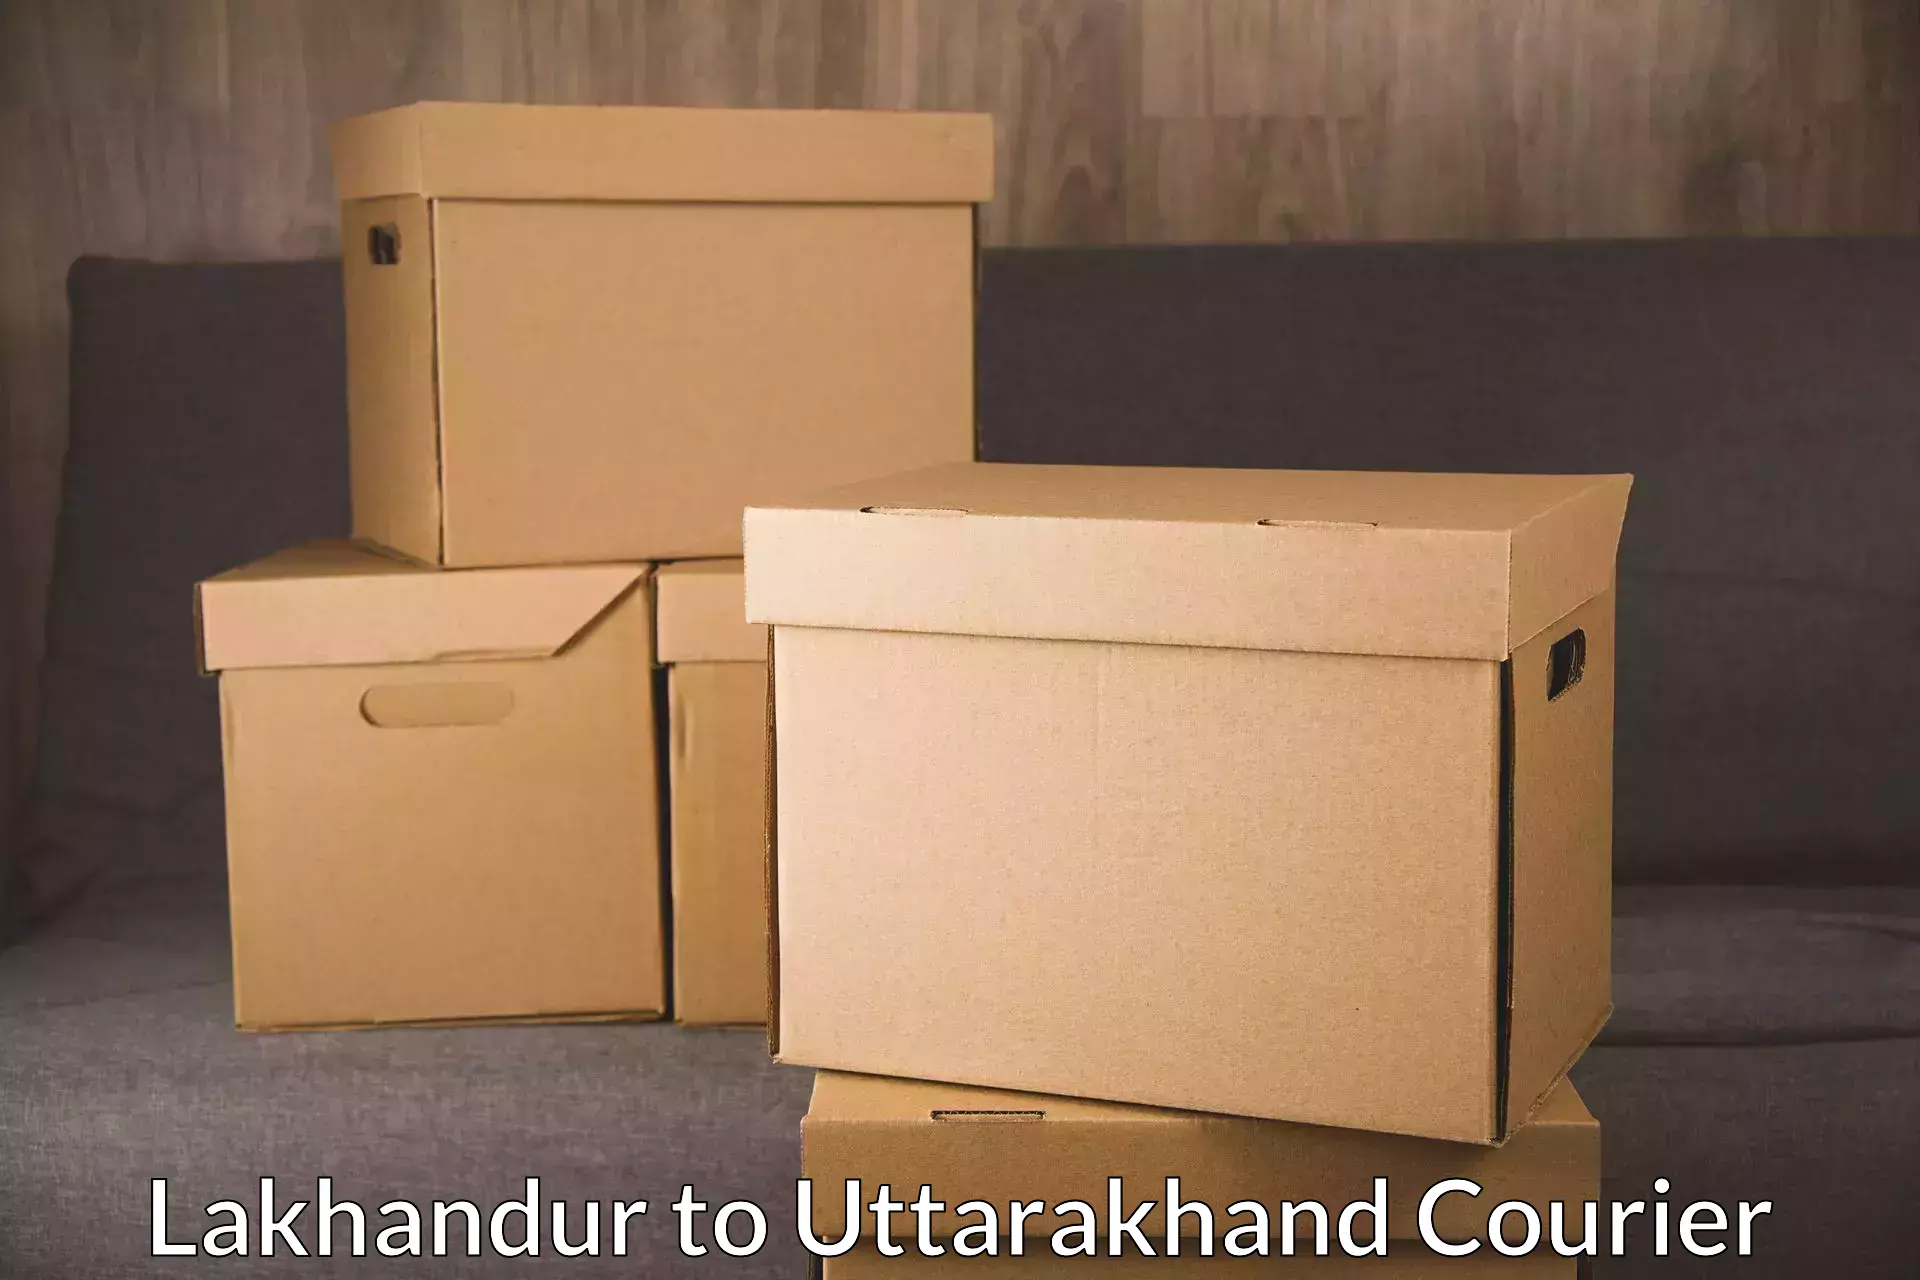 High-speed parcel service Lakhandur to Nainital